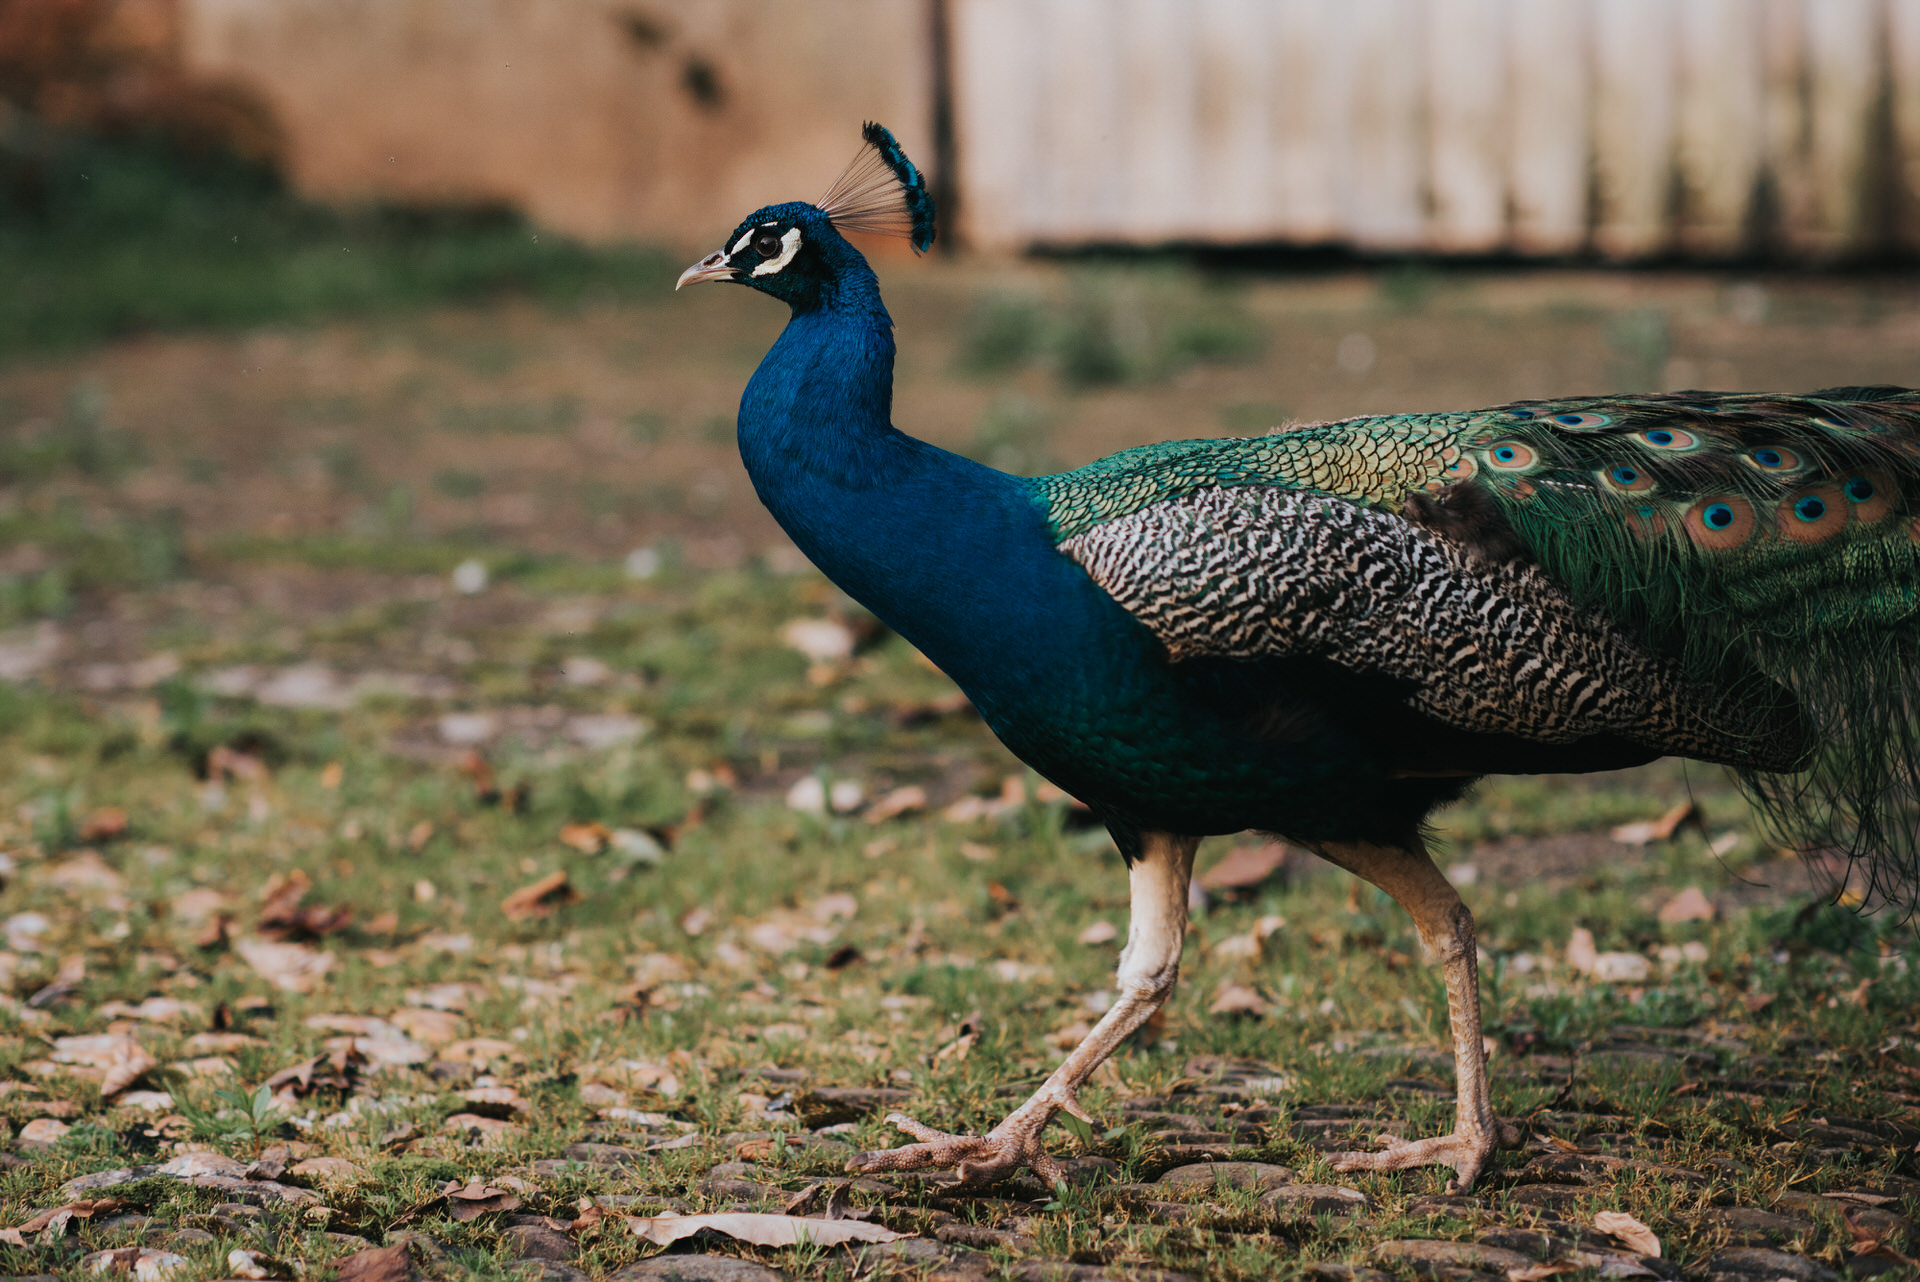 Peacock at Manusel House